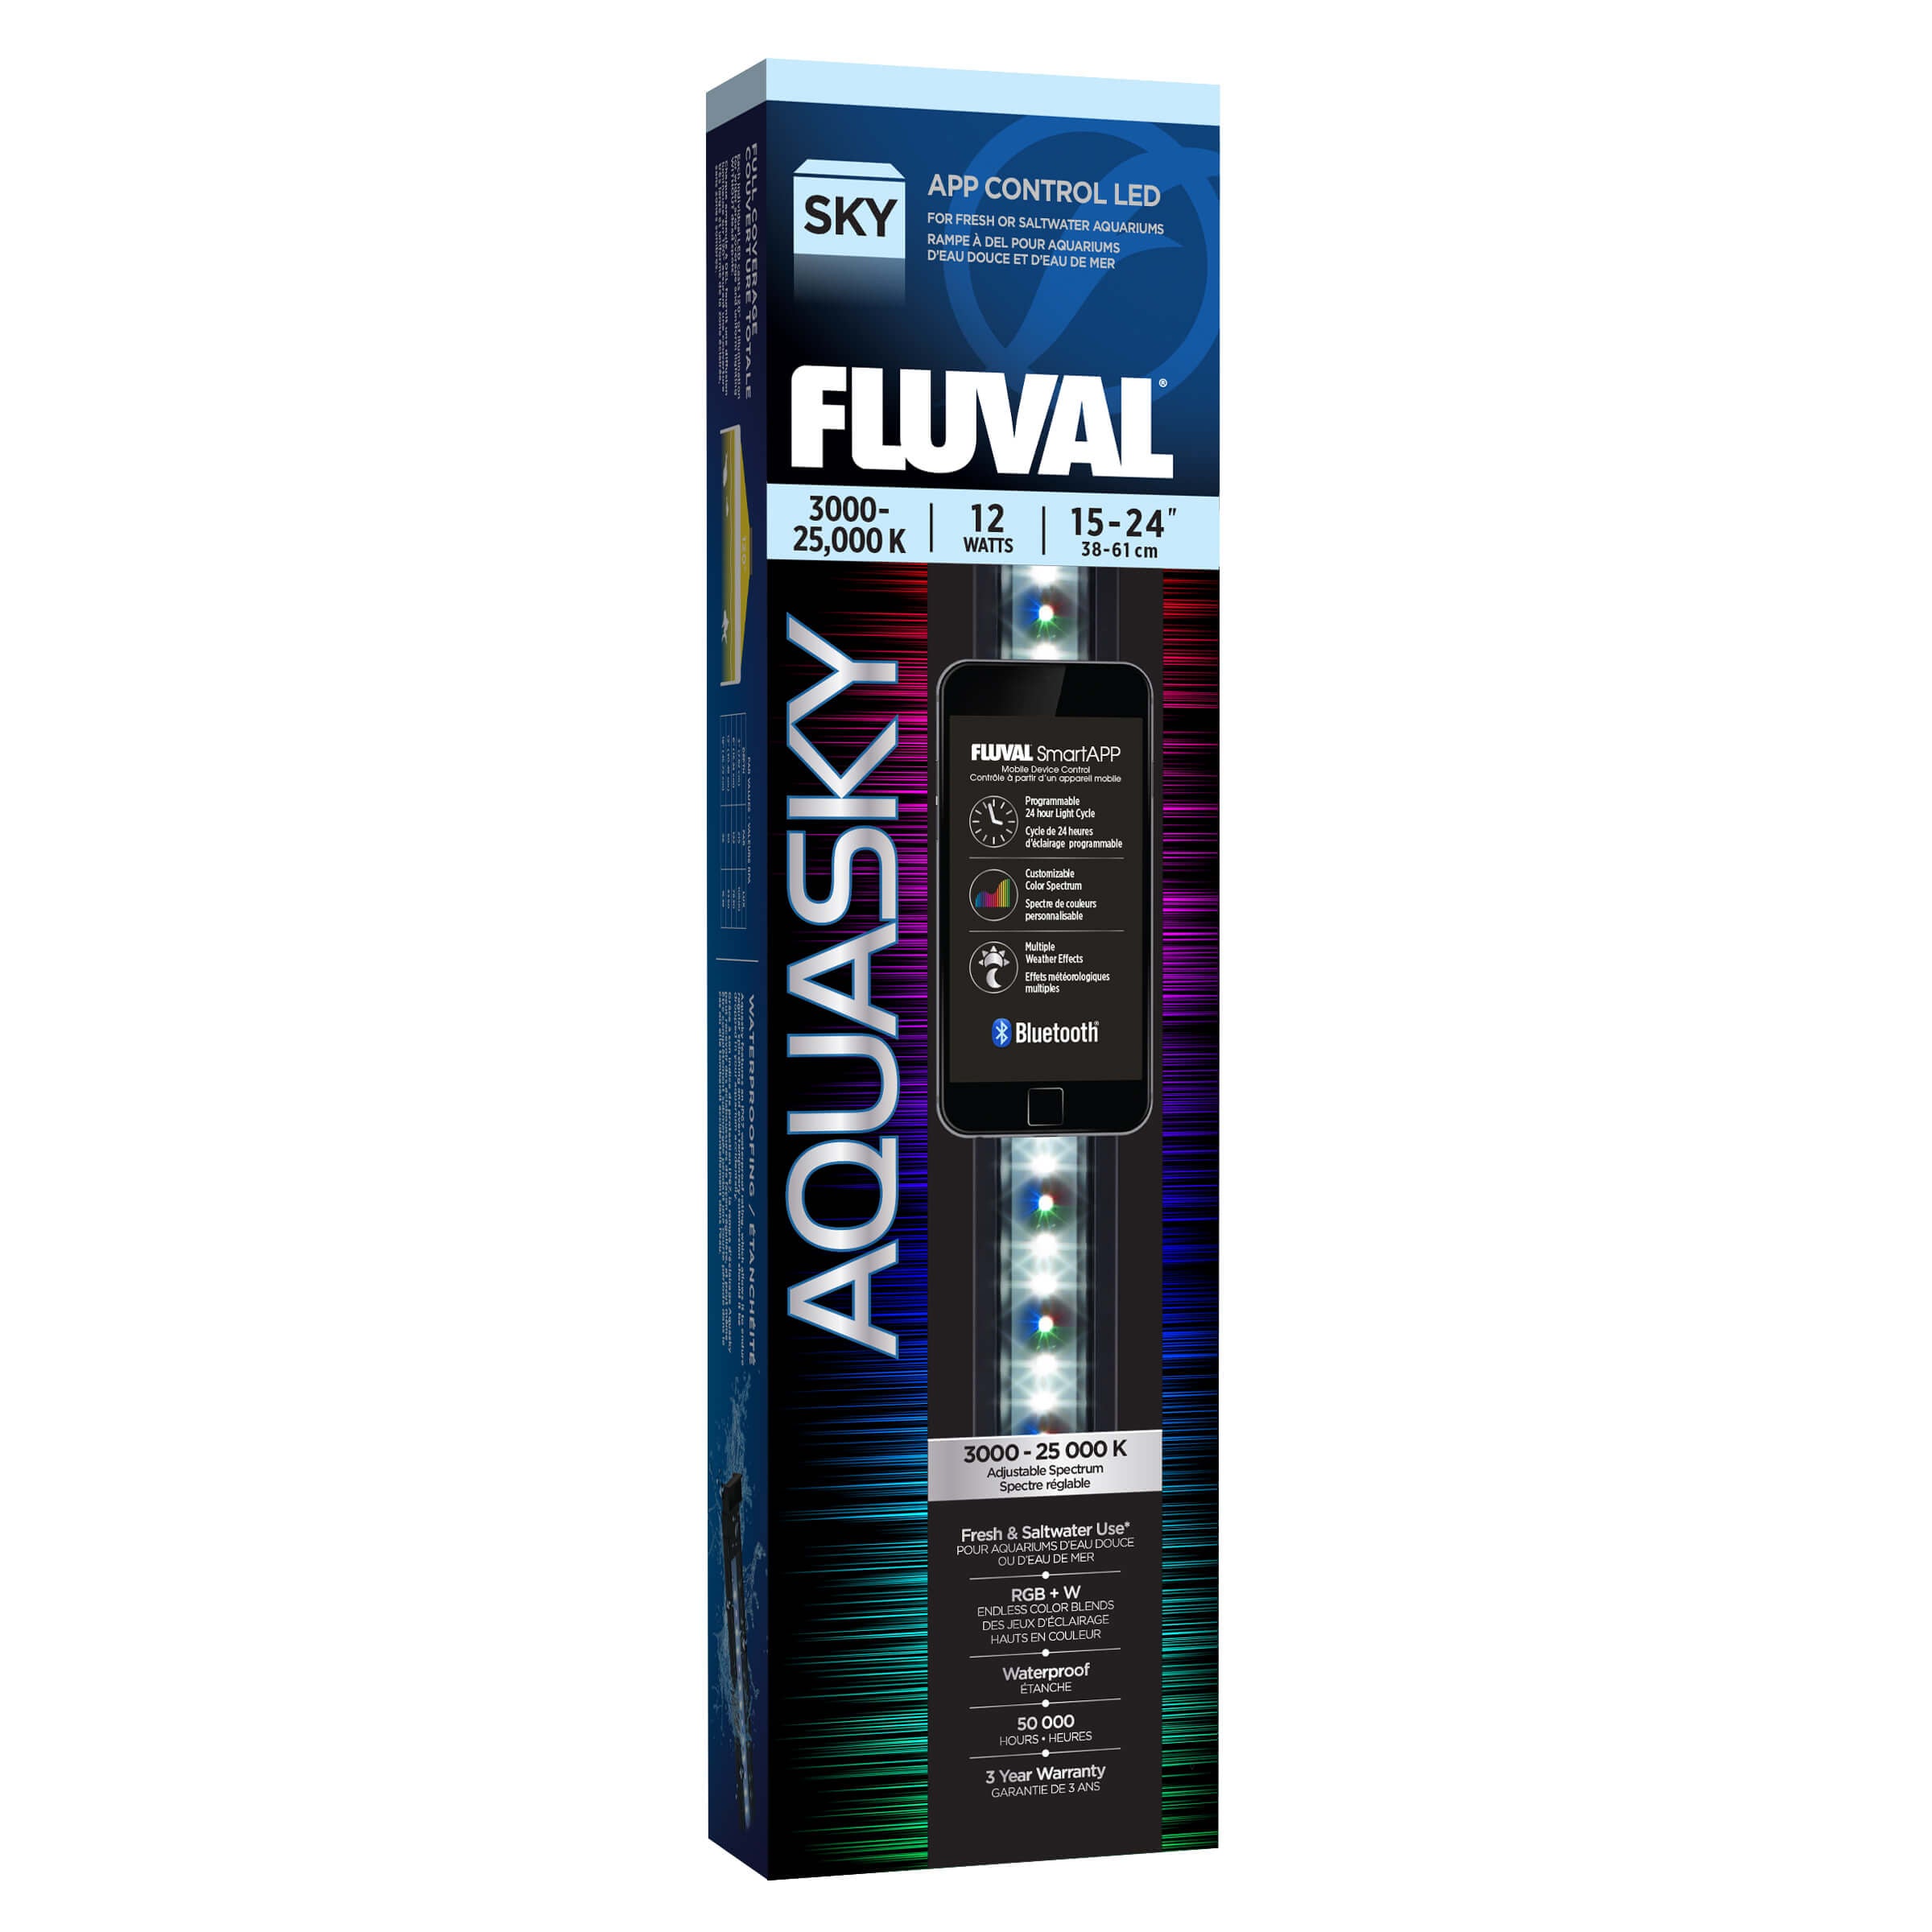 Fluval Aquasky LED with Bluetooth